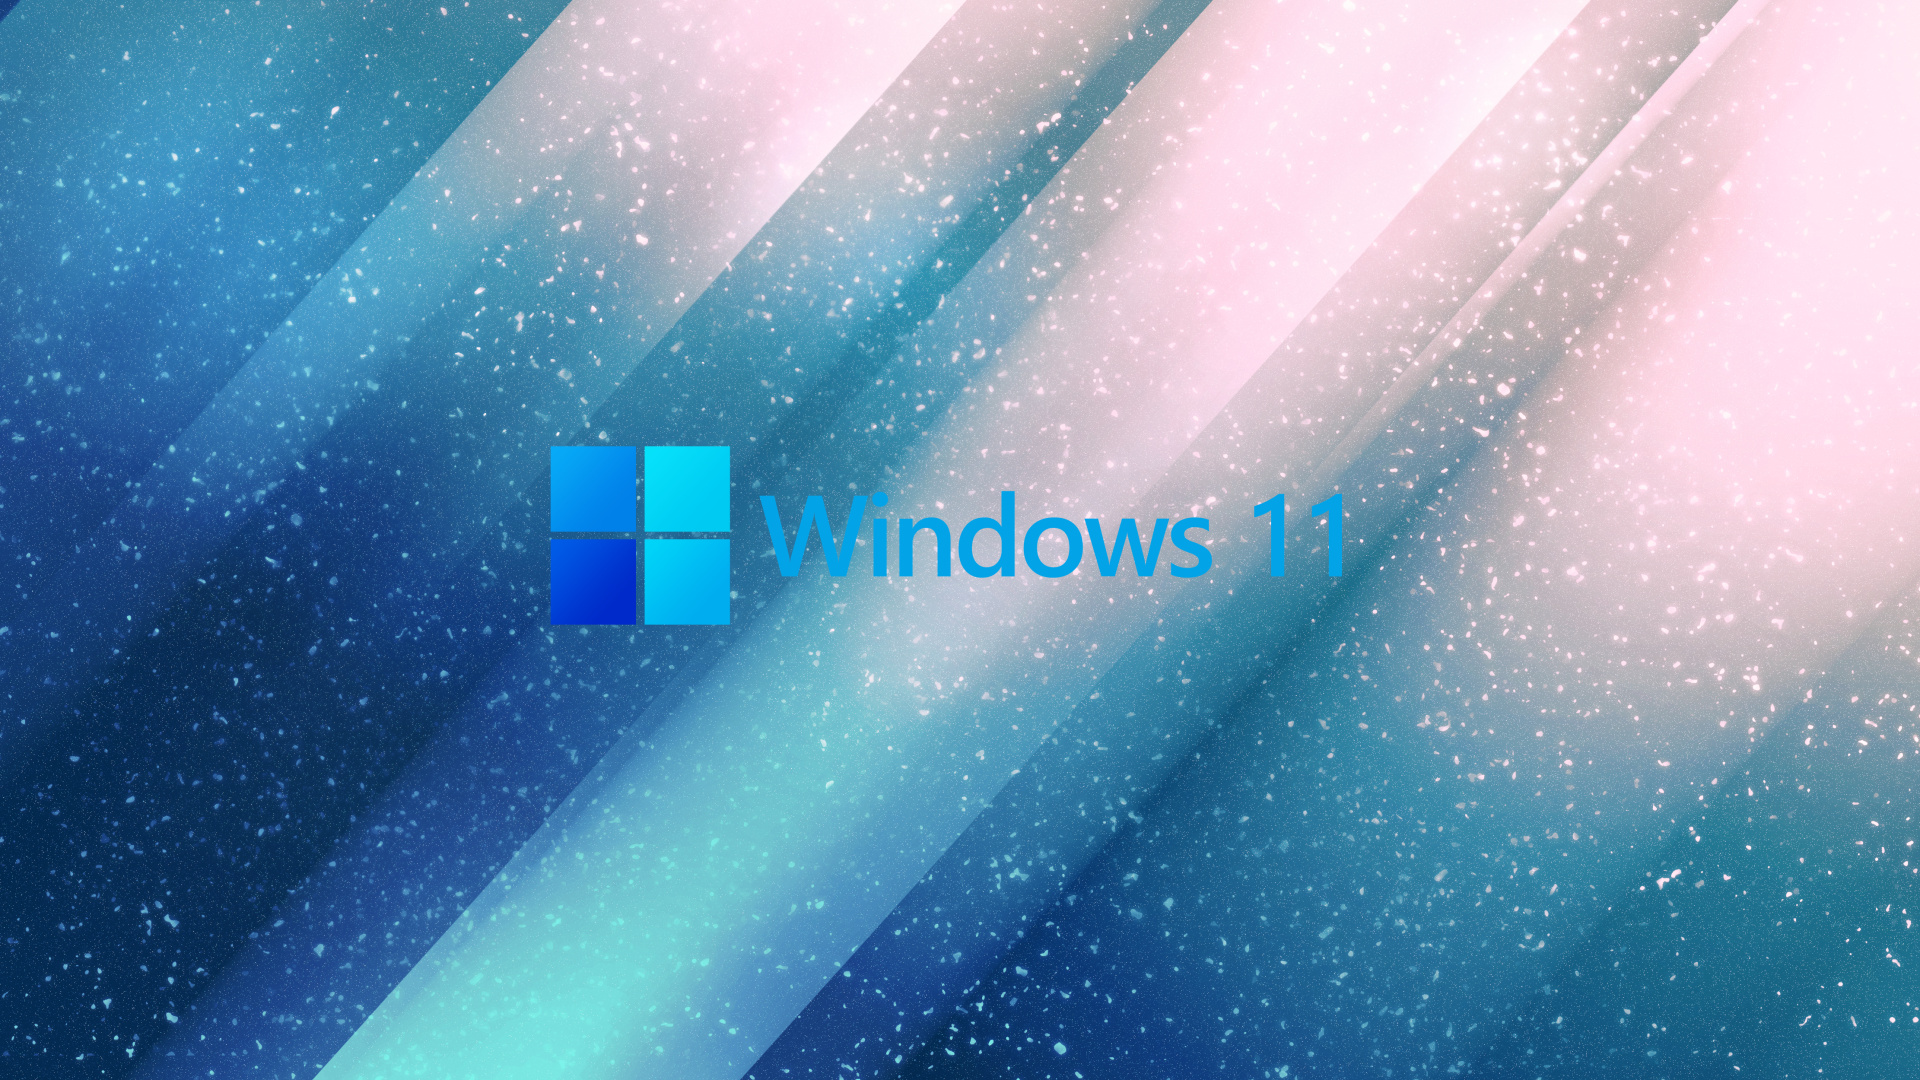 Windows 11 Wallpaper Hd 1920X1080 - Windows 11 1080p Wallpaper Ixpaper